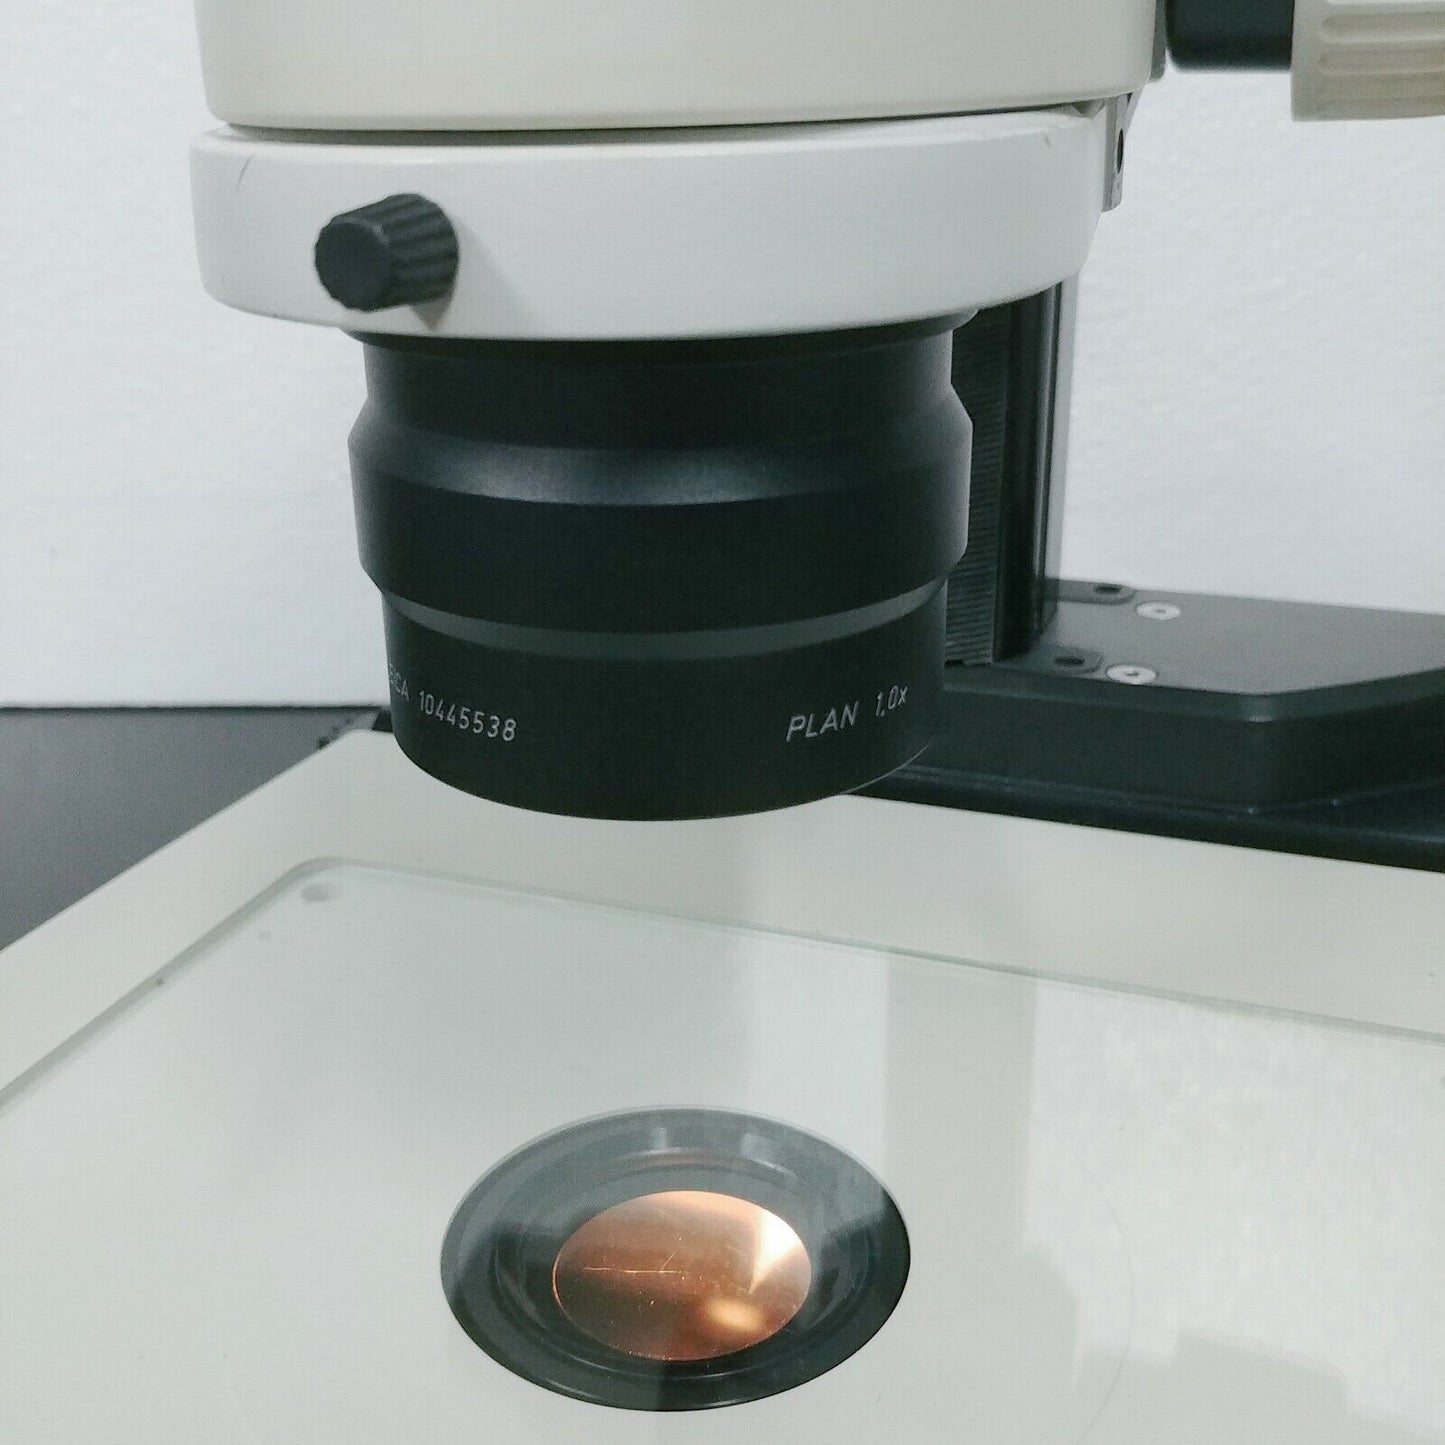 Leica Microscope MZ75 with Illuminated Base - microscopemarketplace